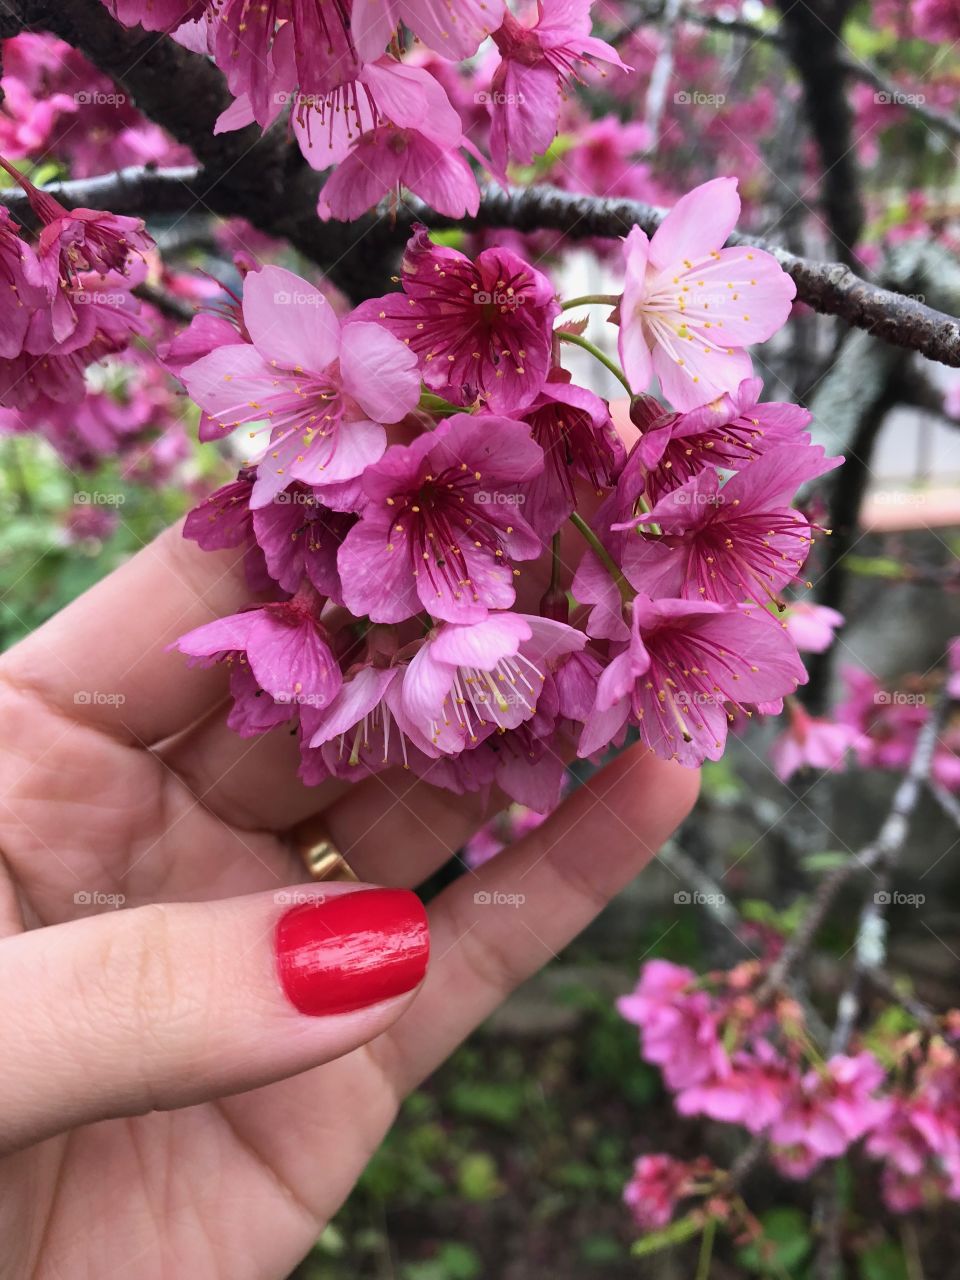 Sakura and nail. Nature inspire beauty and beauty inspire nature!